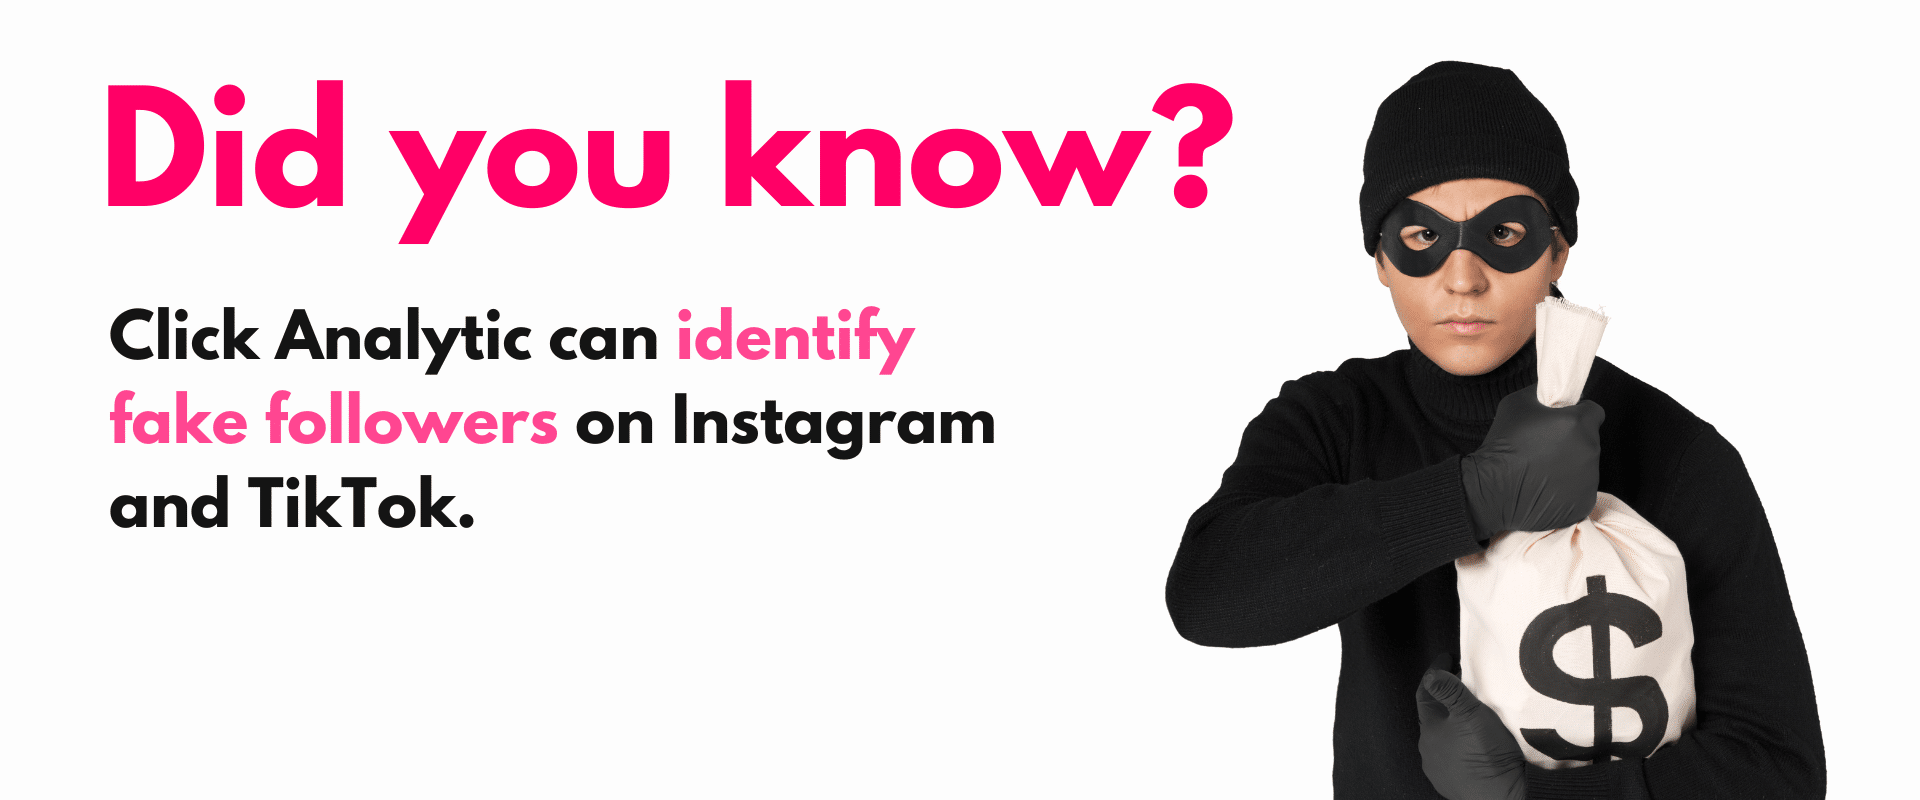 TikTok vs Instagram: Our platform can help identify fake followers on both.